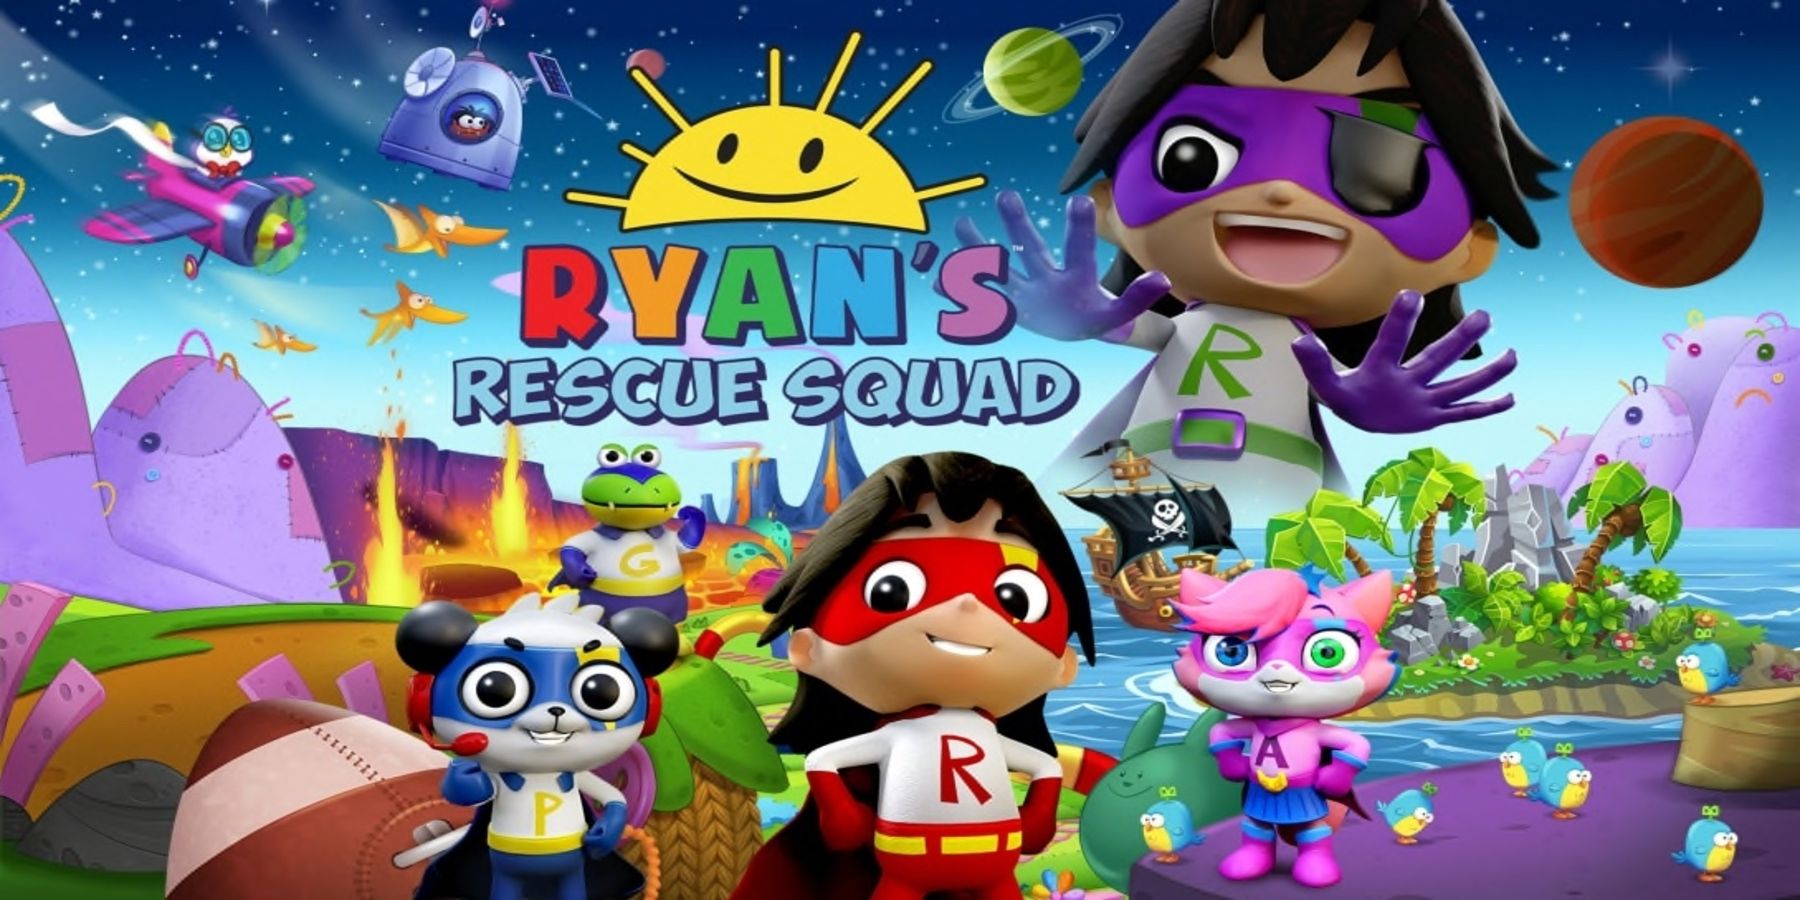 Ryan's rescue squad game cover art